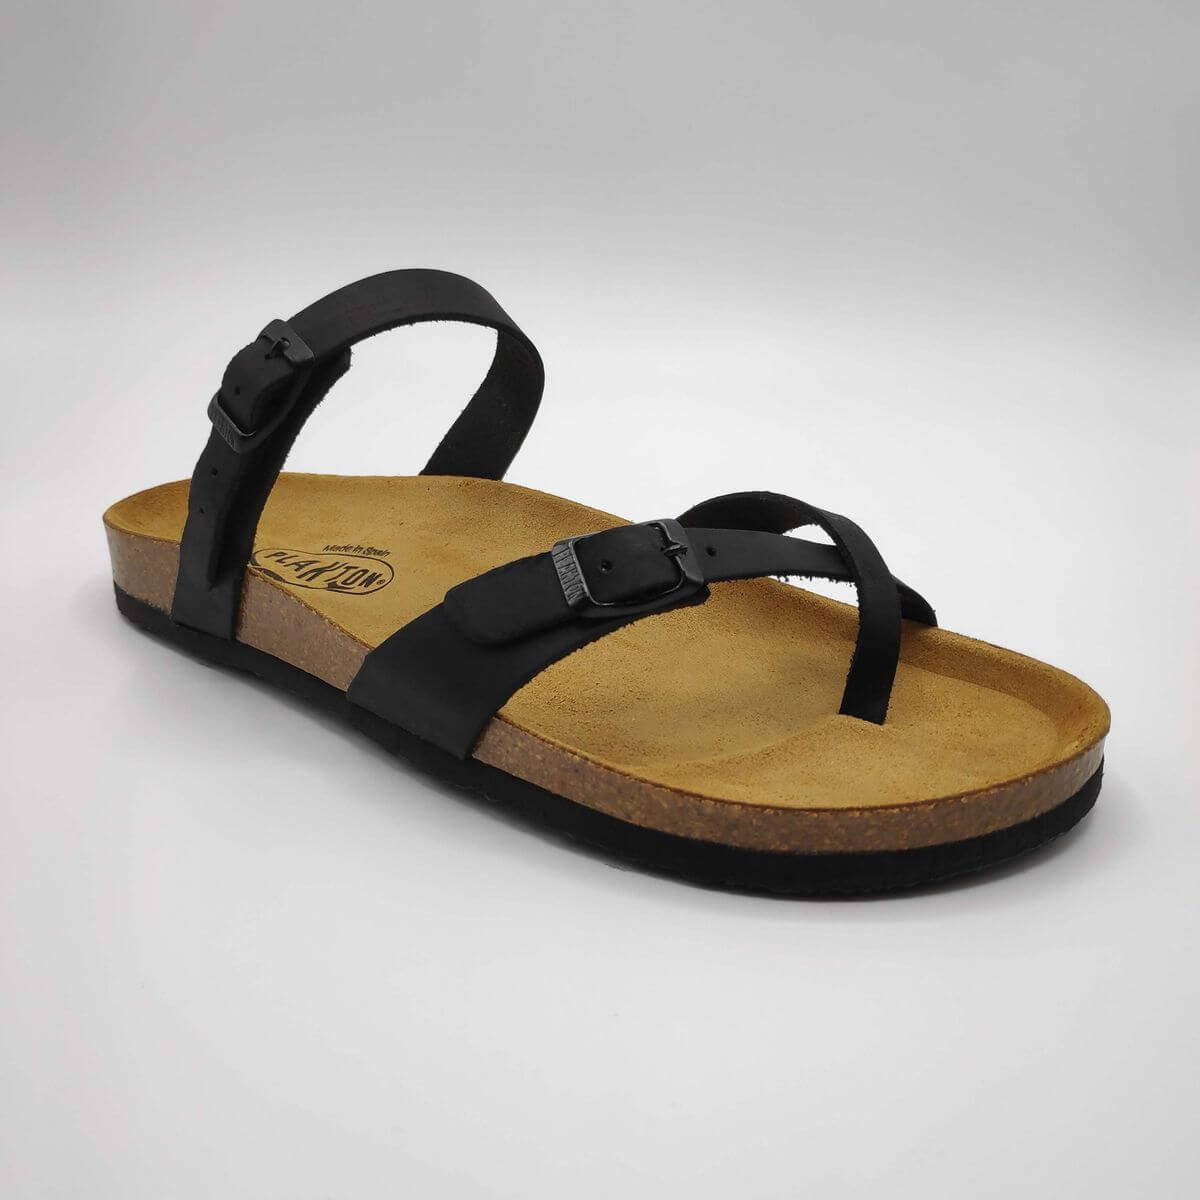 Plakton 101032 Δερμάτινα Ανατομικά Σανδάλια plakton sandals 101204 -  Δερμάτινα Σανδάλια Παγώνης | Χειροποίητα Ελληνικά Σανδάλια | Νάξος